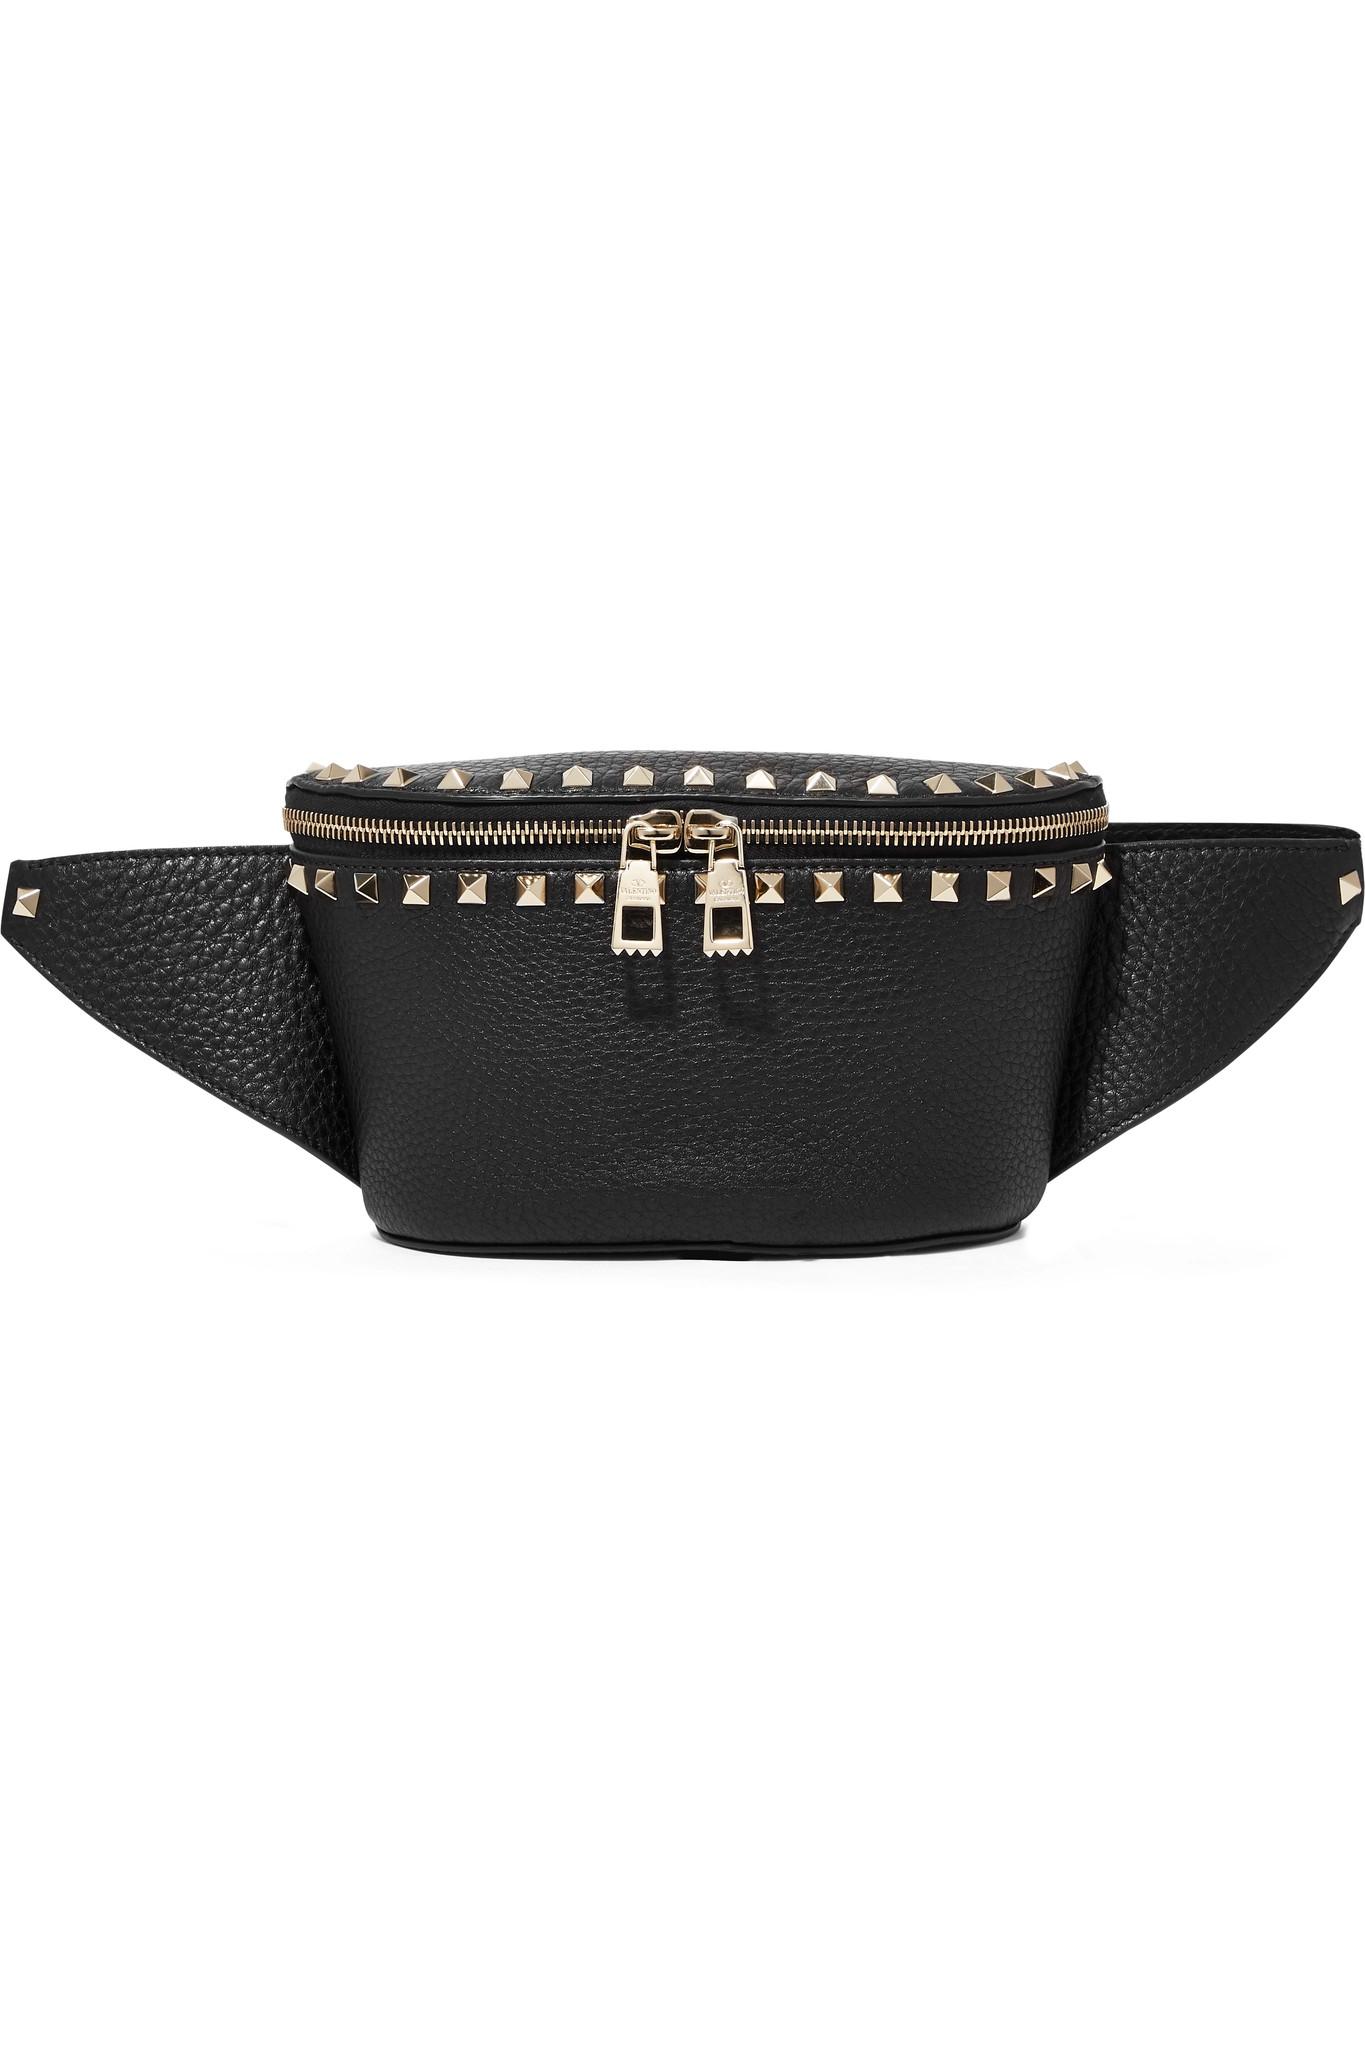 Lyst - Valentino Garavani The Rockstud Textured-leather Belt Bag in Black